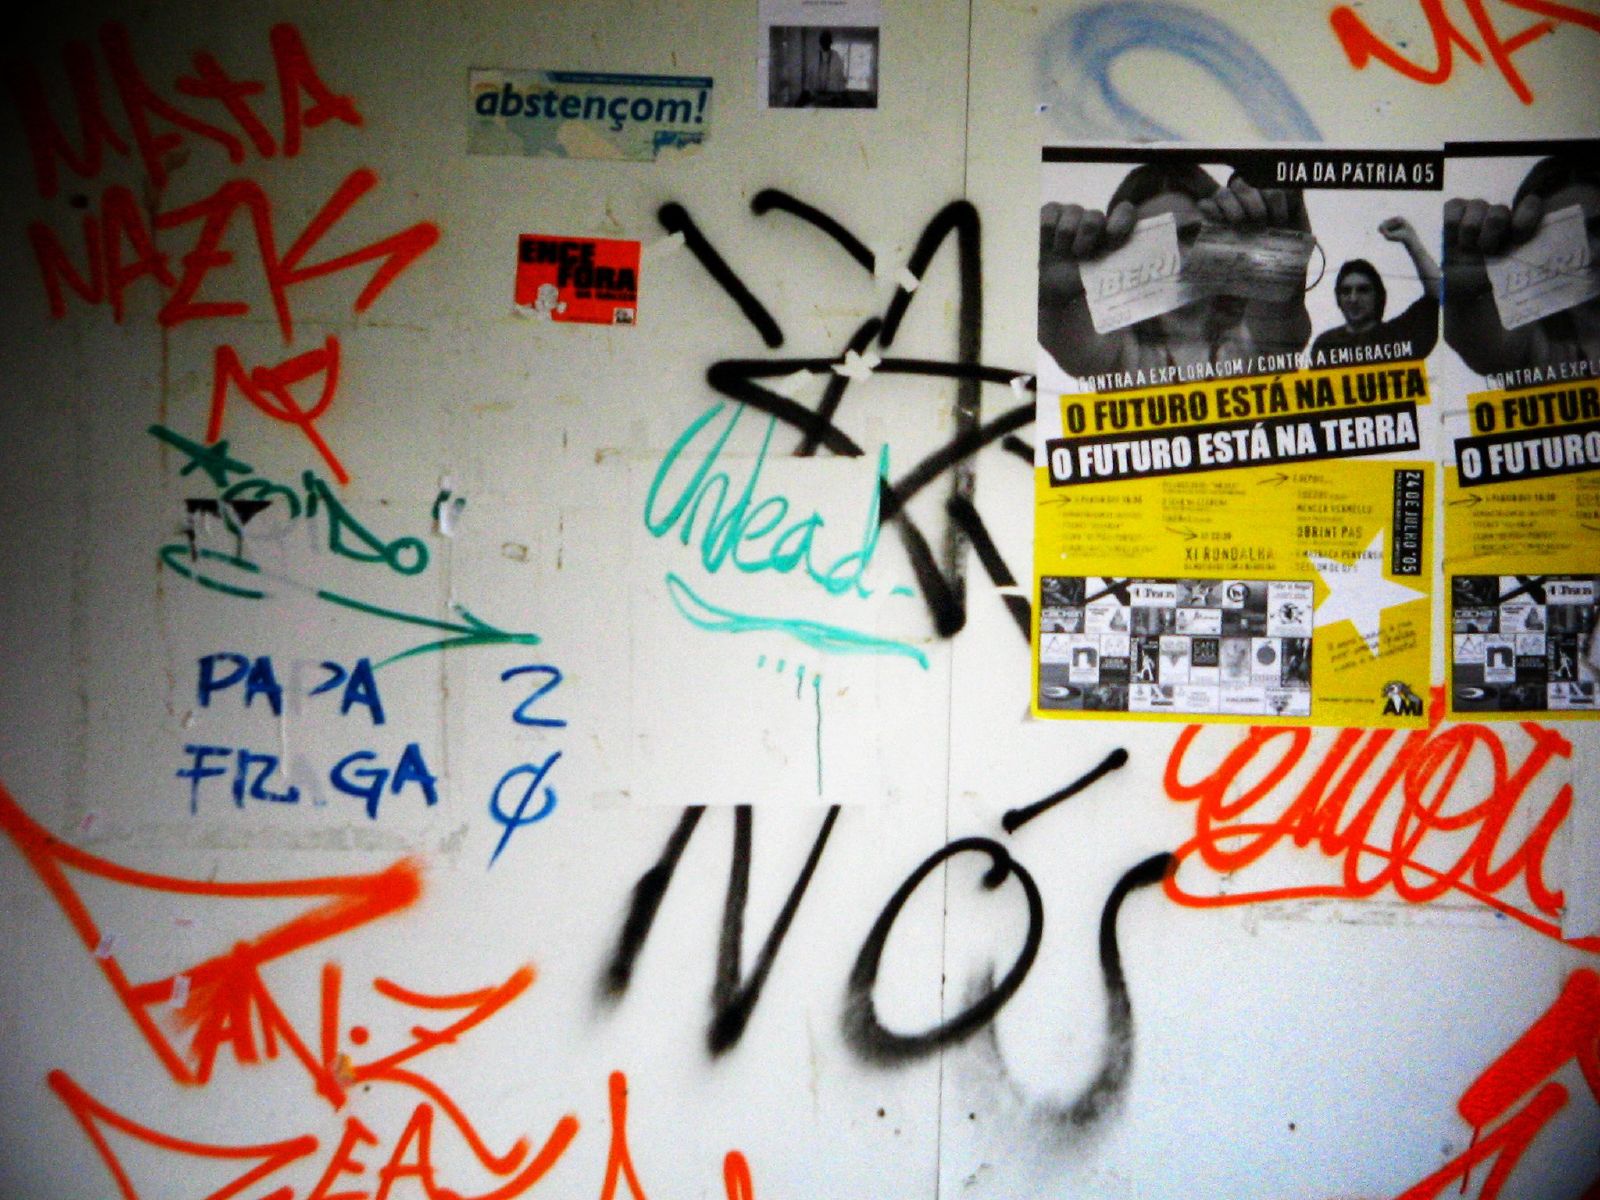 graffiti on the walls shows various signs and symbols